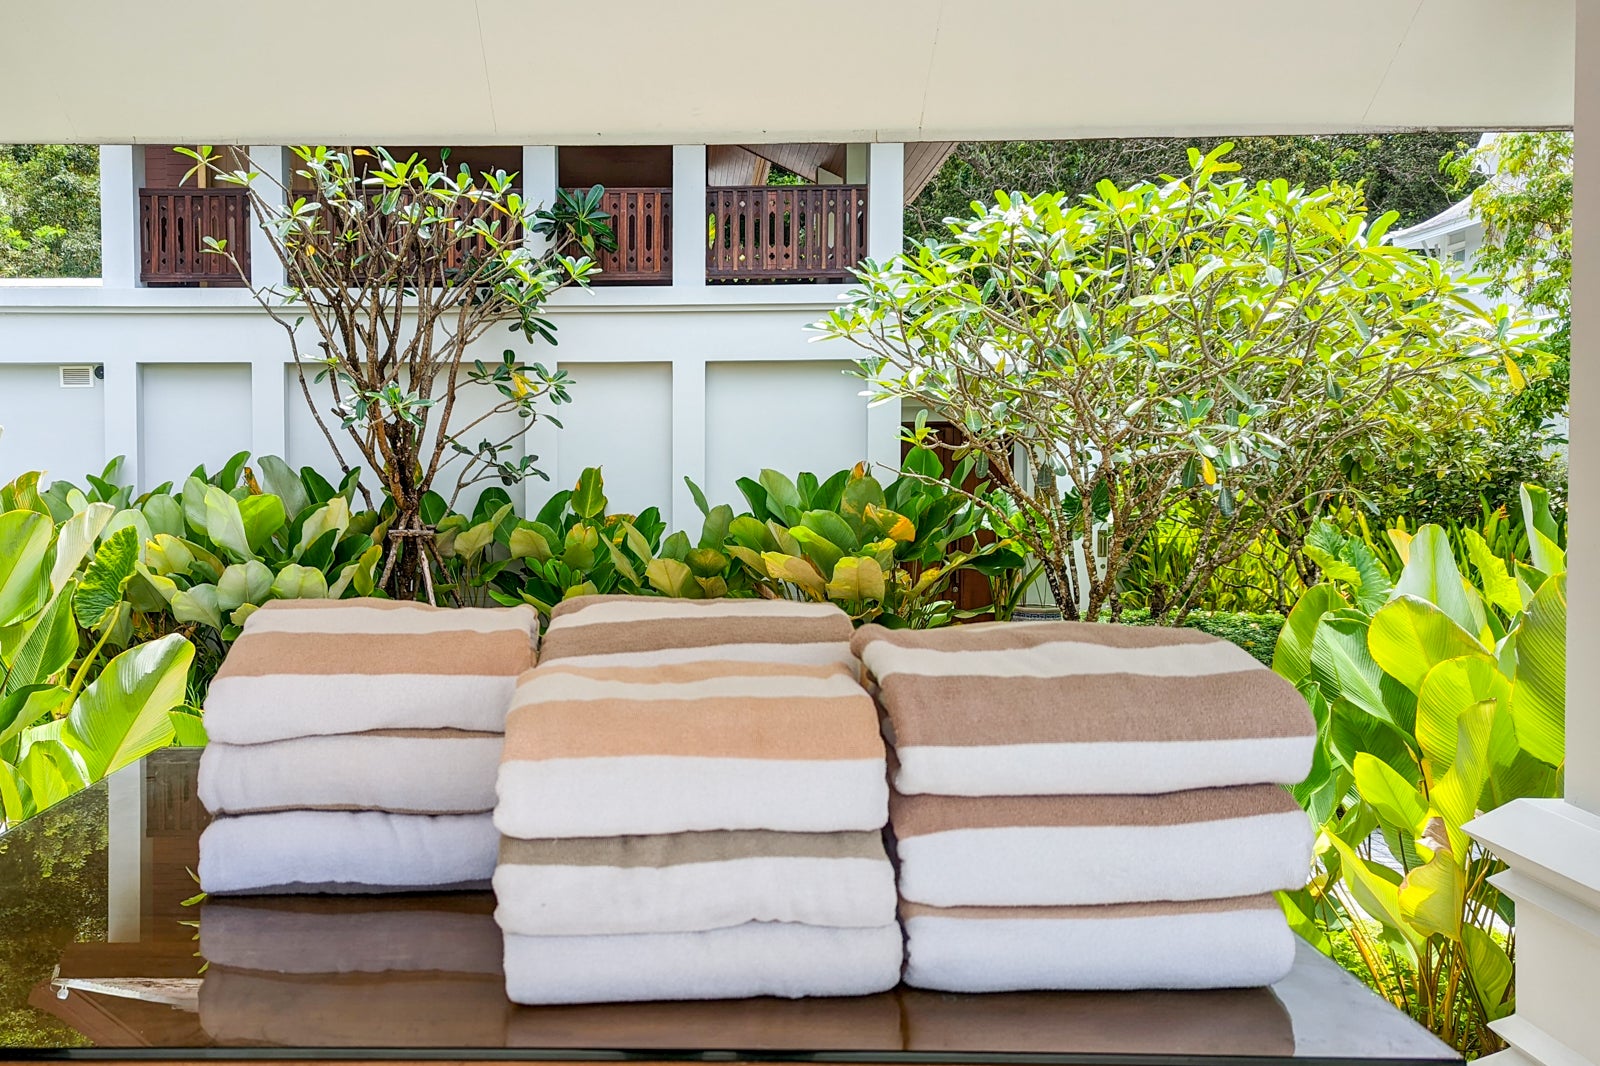 InterContinental Phuket Resort towels